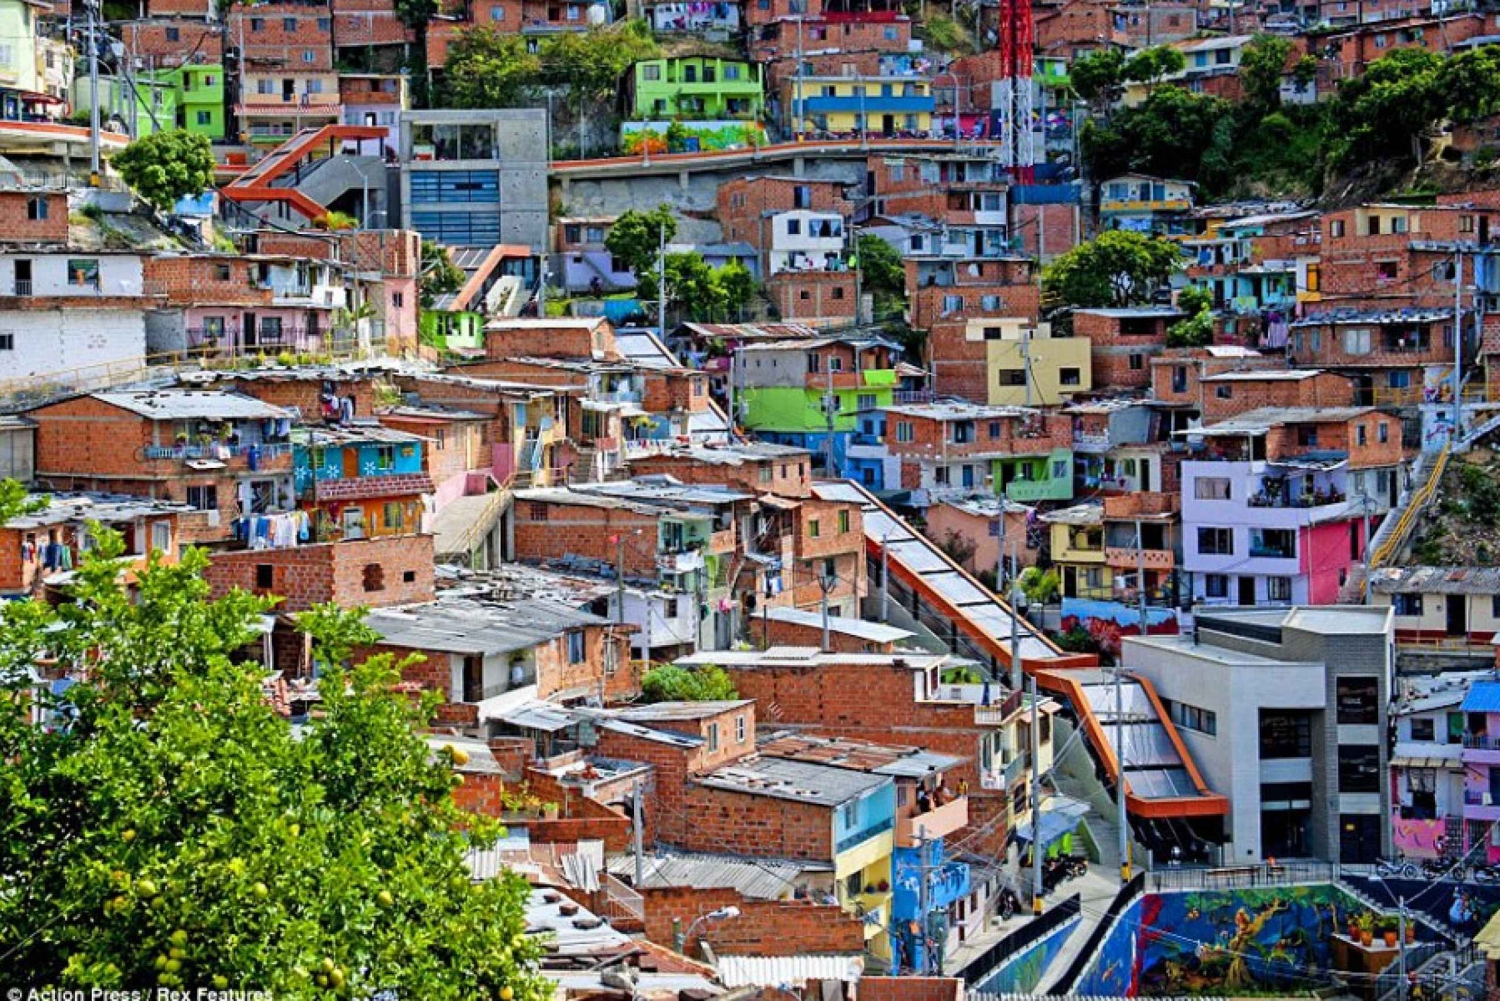 Medellín: Comuna 13 Struggle and Splendor